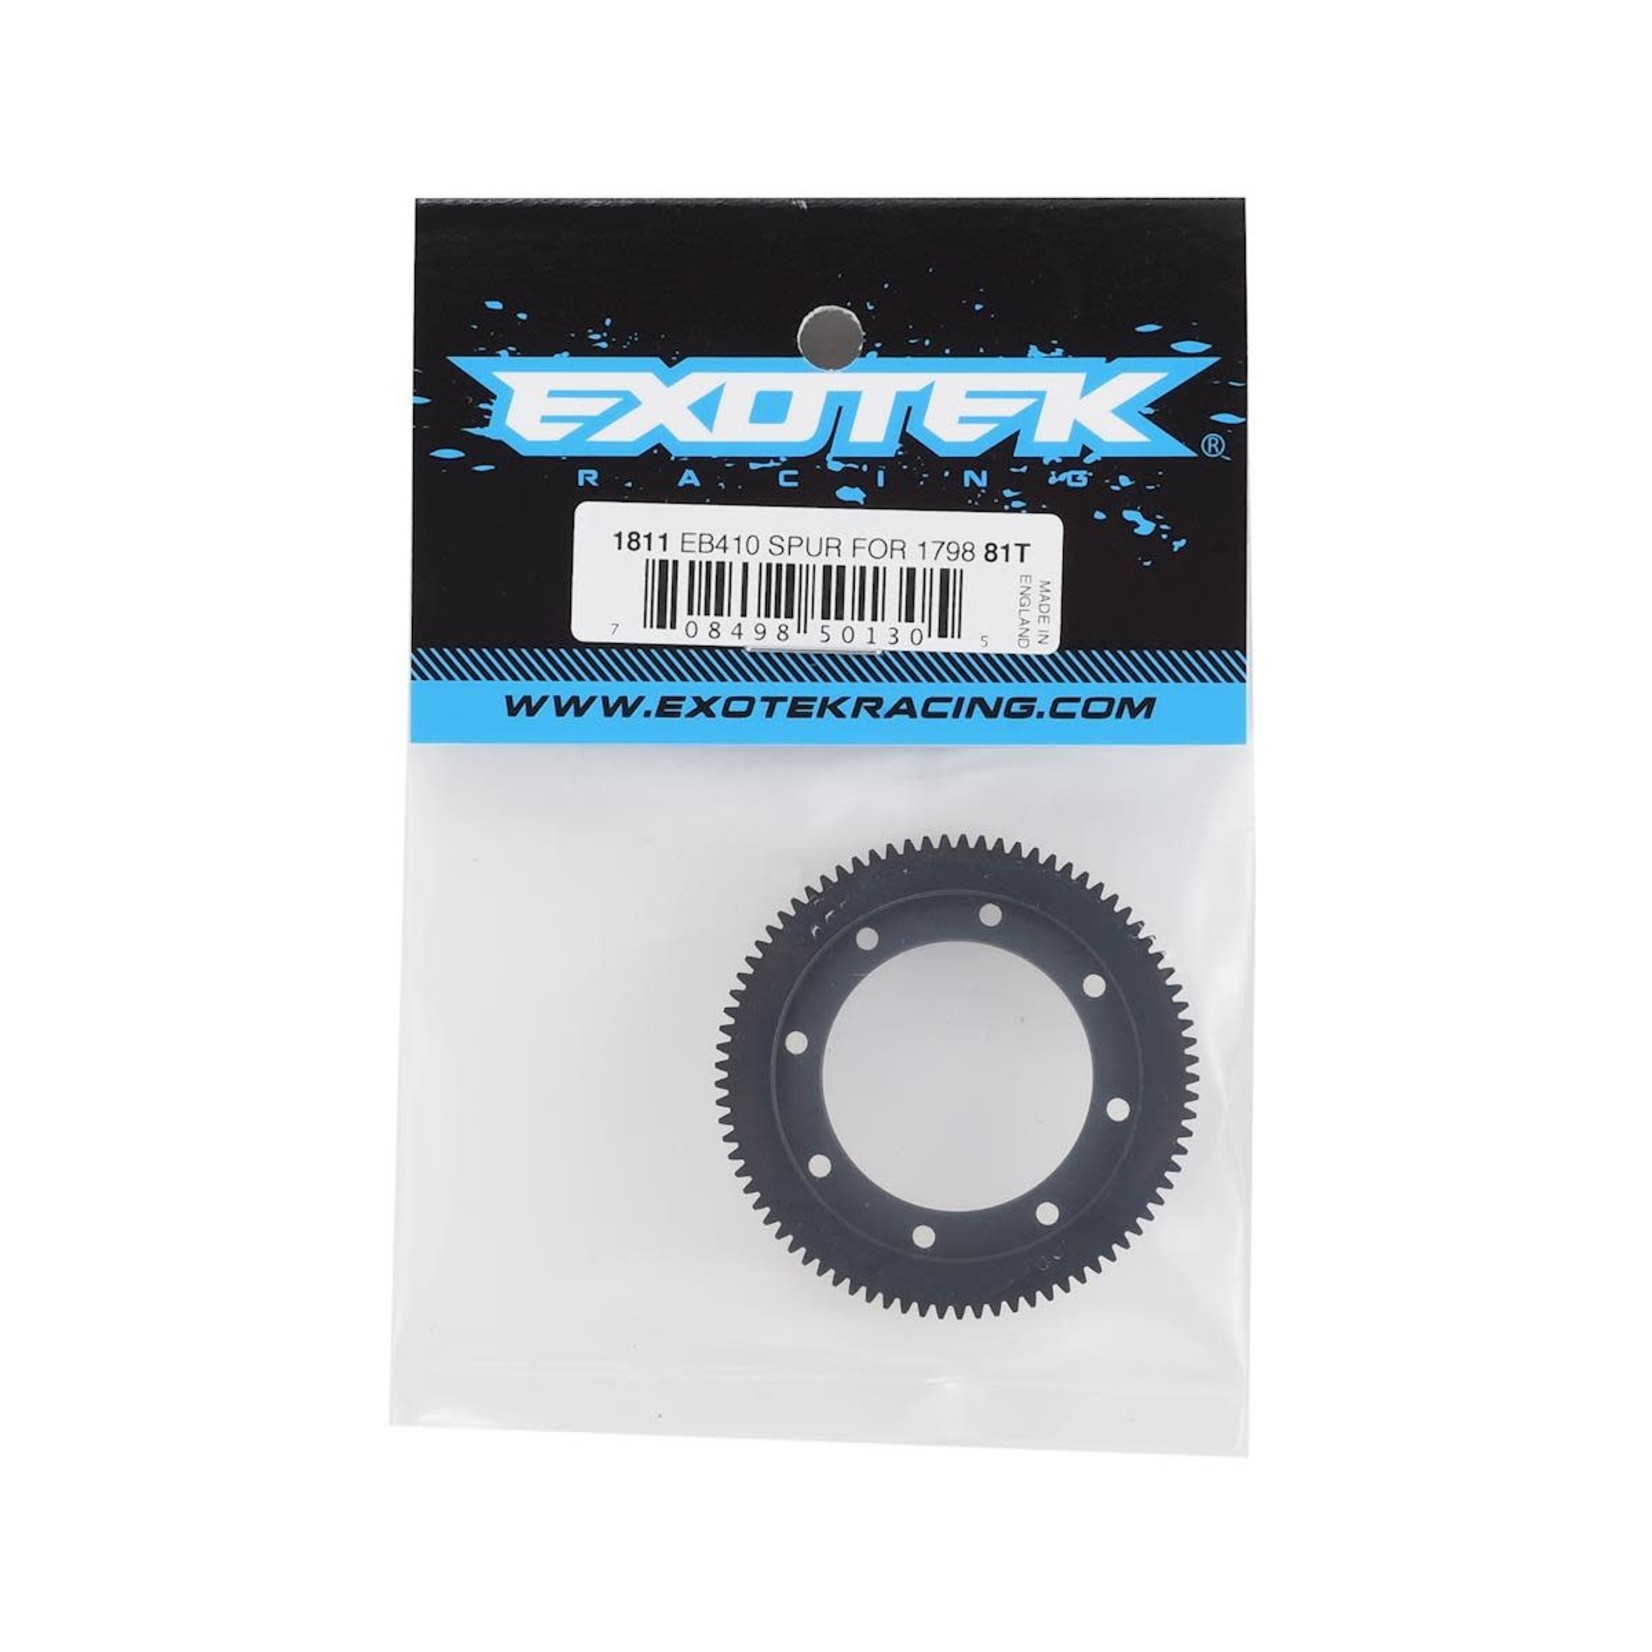 Exotek Exotek EB410 48P Machined Spur Gear (81T) #1811